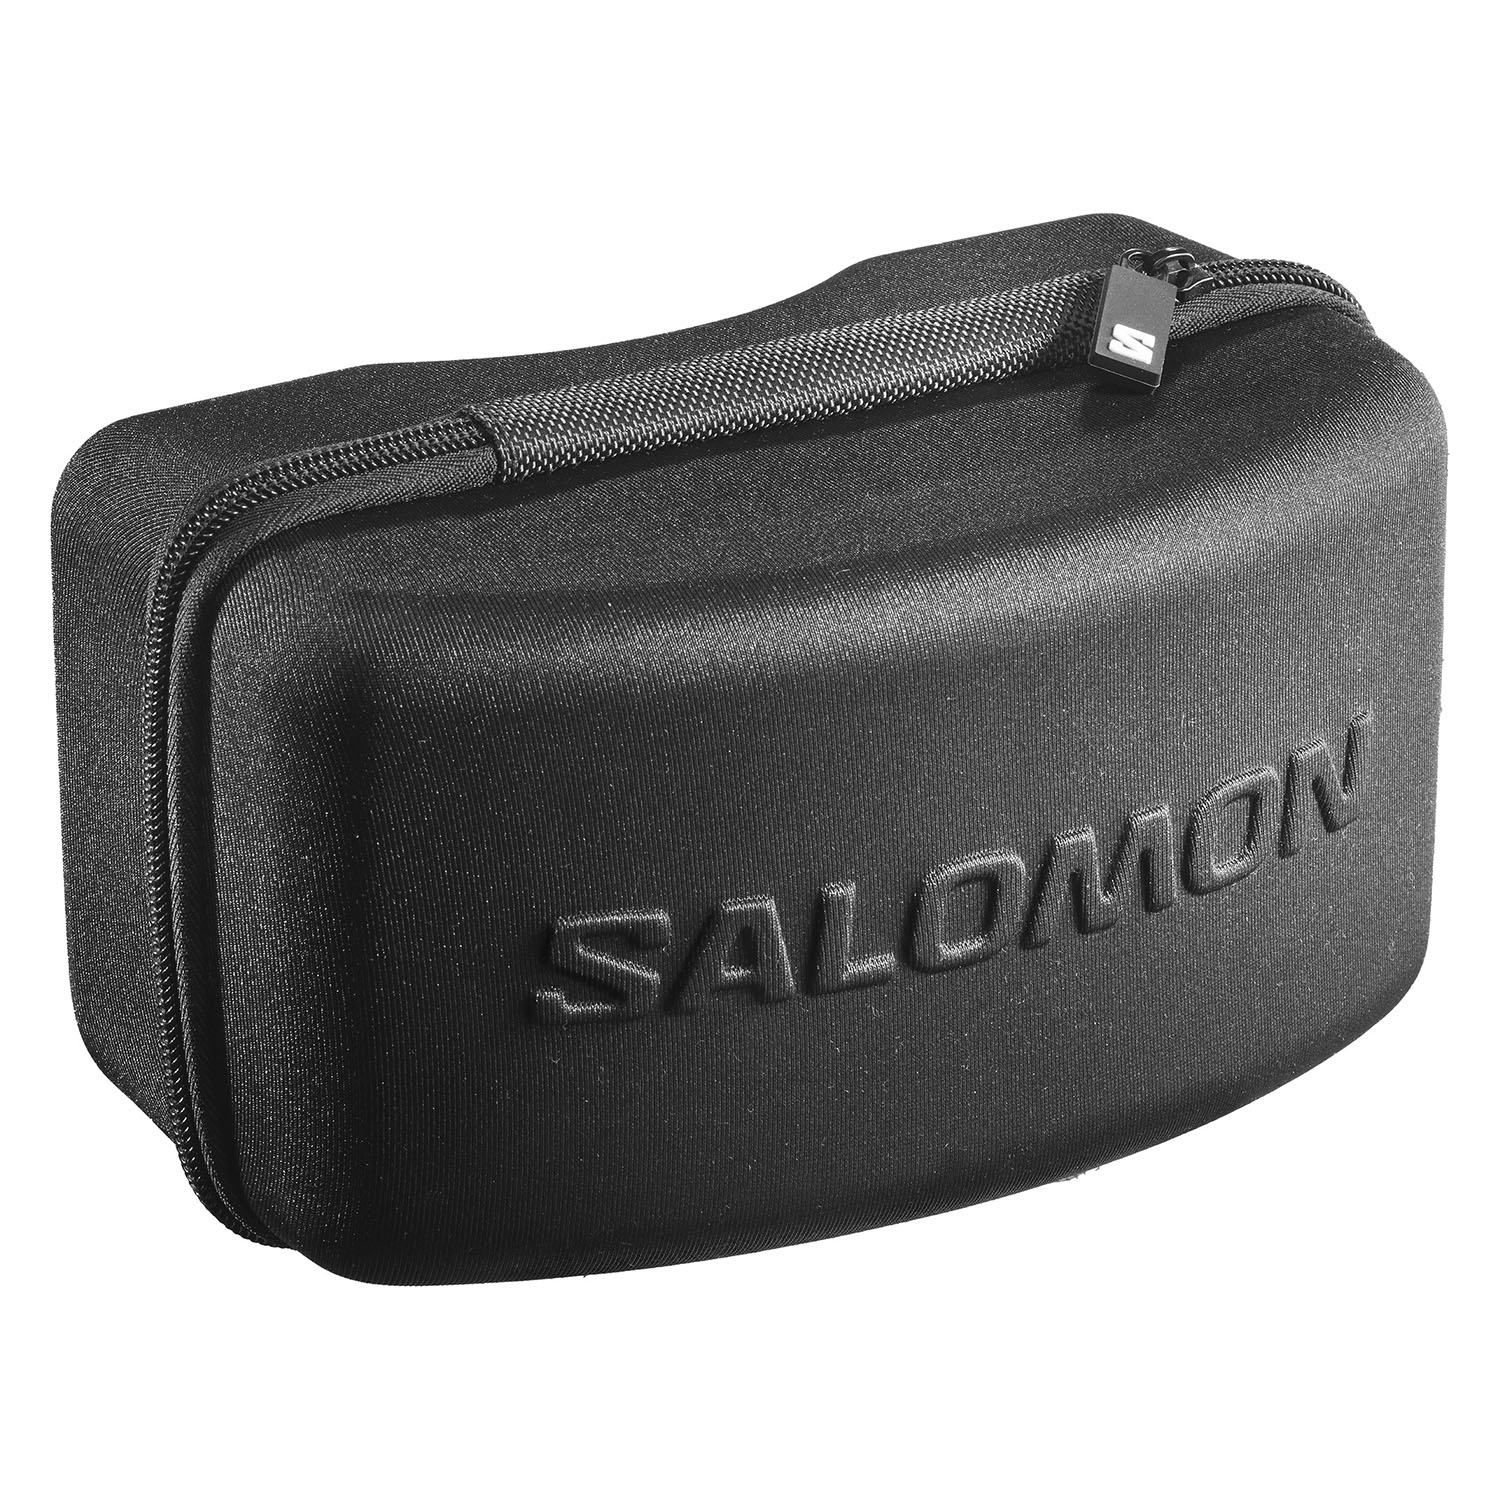 Очки горнолыжные SALOMON Sentry Pro Sigma WhiteMoss